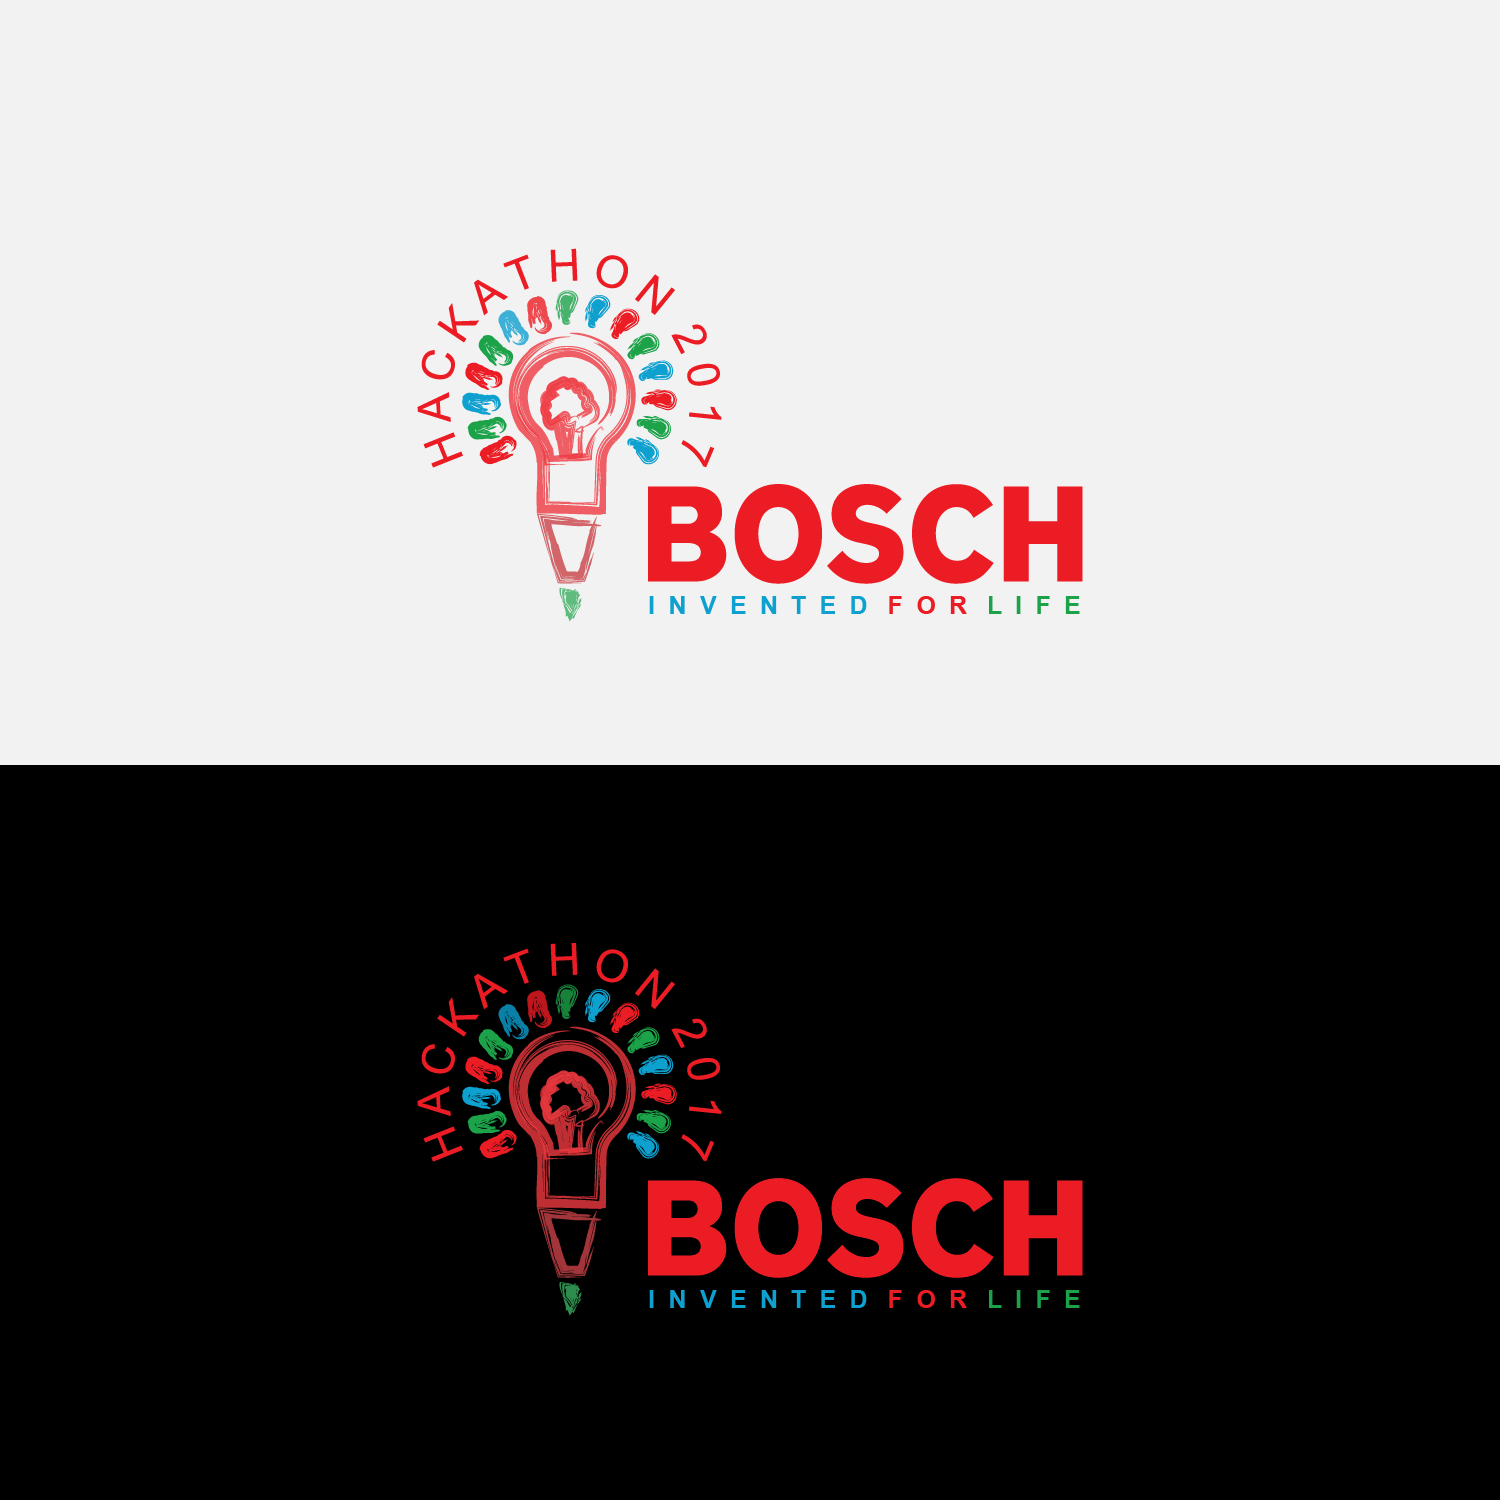 Bosch Invented for Life Logo - Playful, Modern, Engineering Logo Design for BOSCH, INVENTED FOR ...